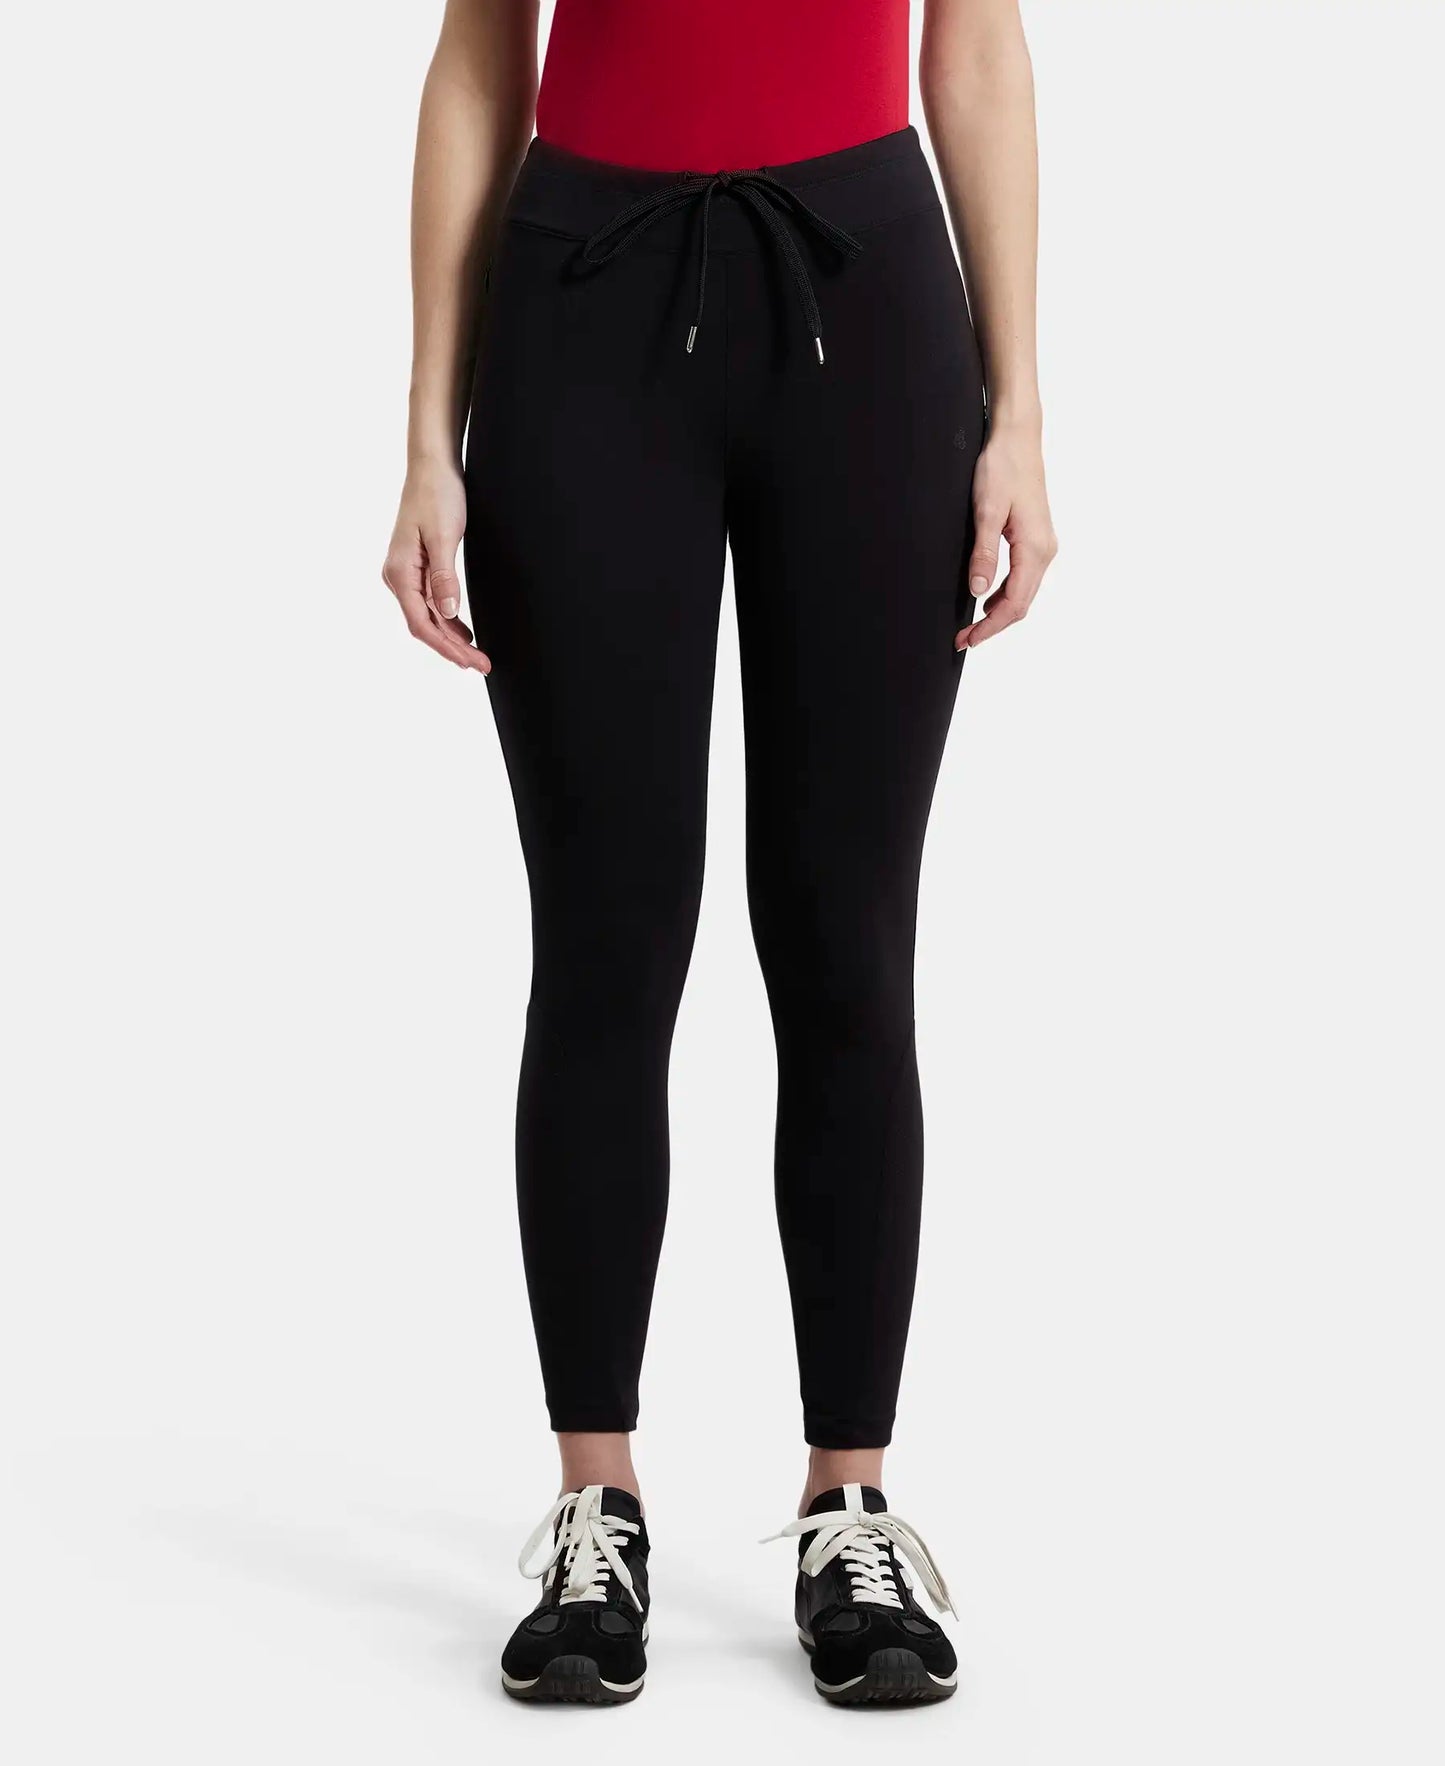 Super Combed Cotton Elastane Yoga Pants with Side Zipper Pocket - Black-1